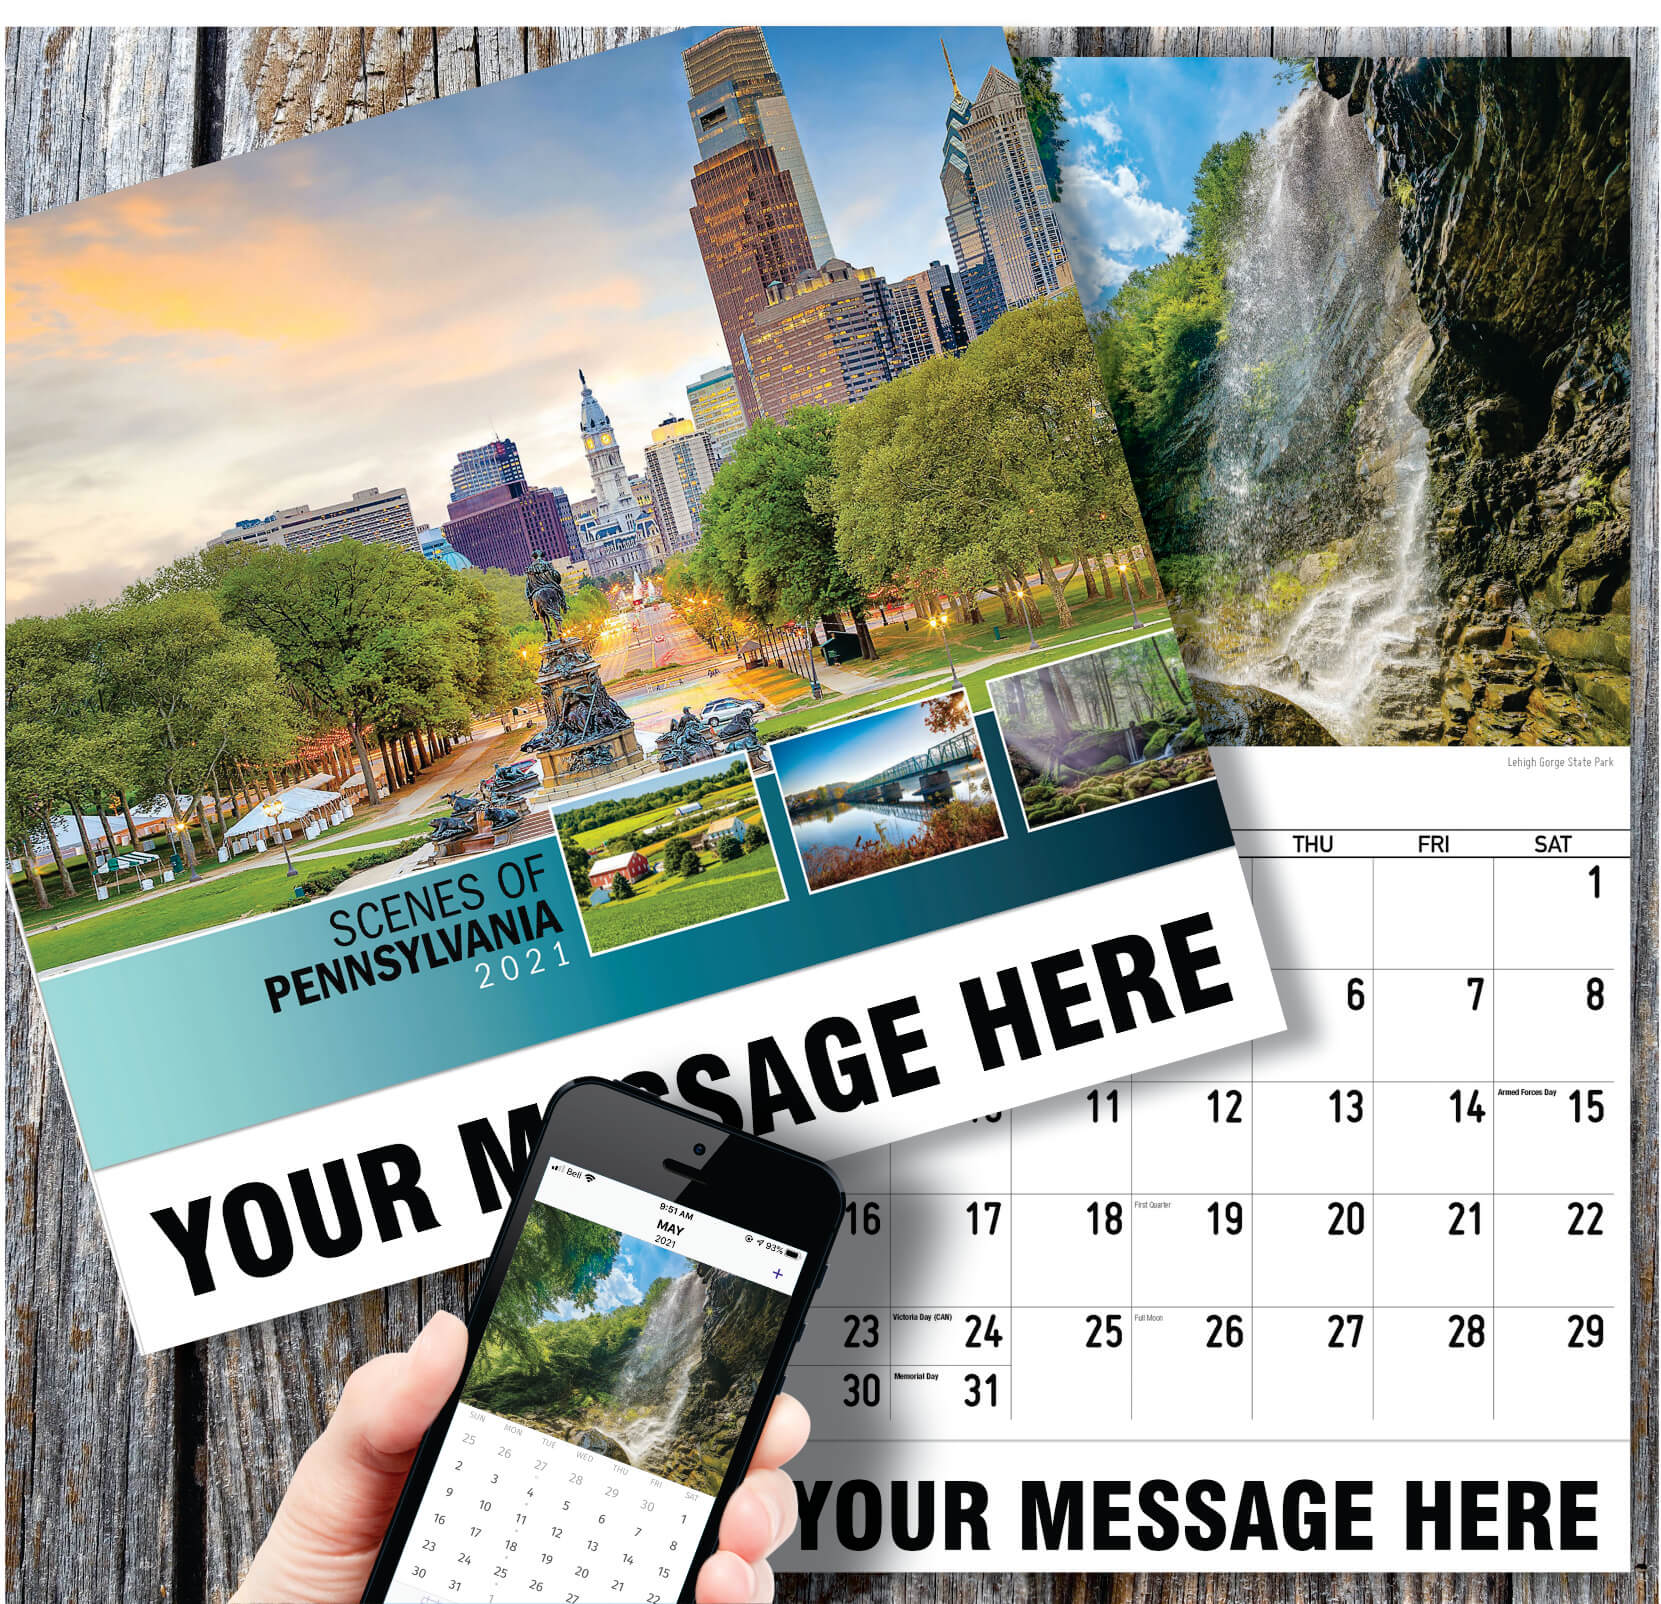 Penn State Events Calendar 2021 2022 Calendar